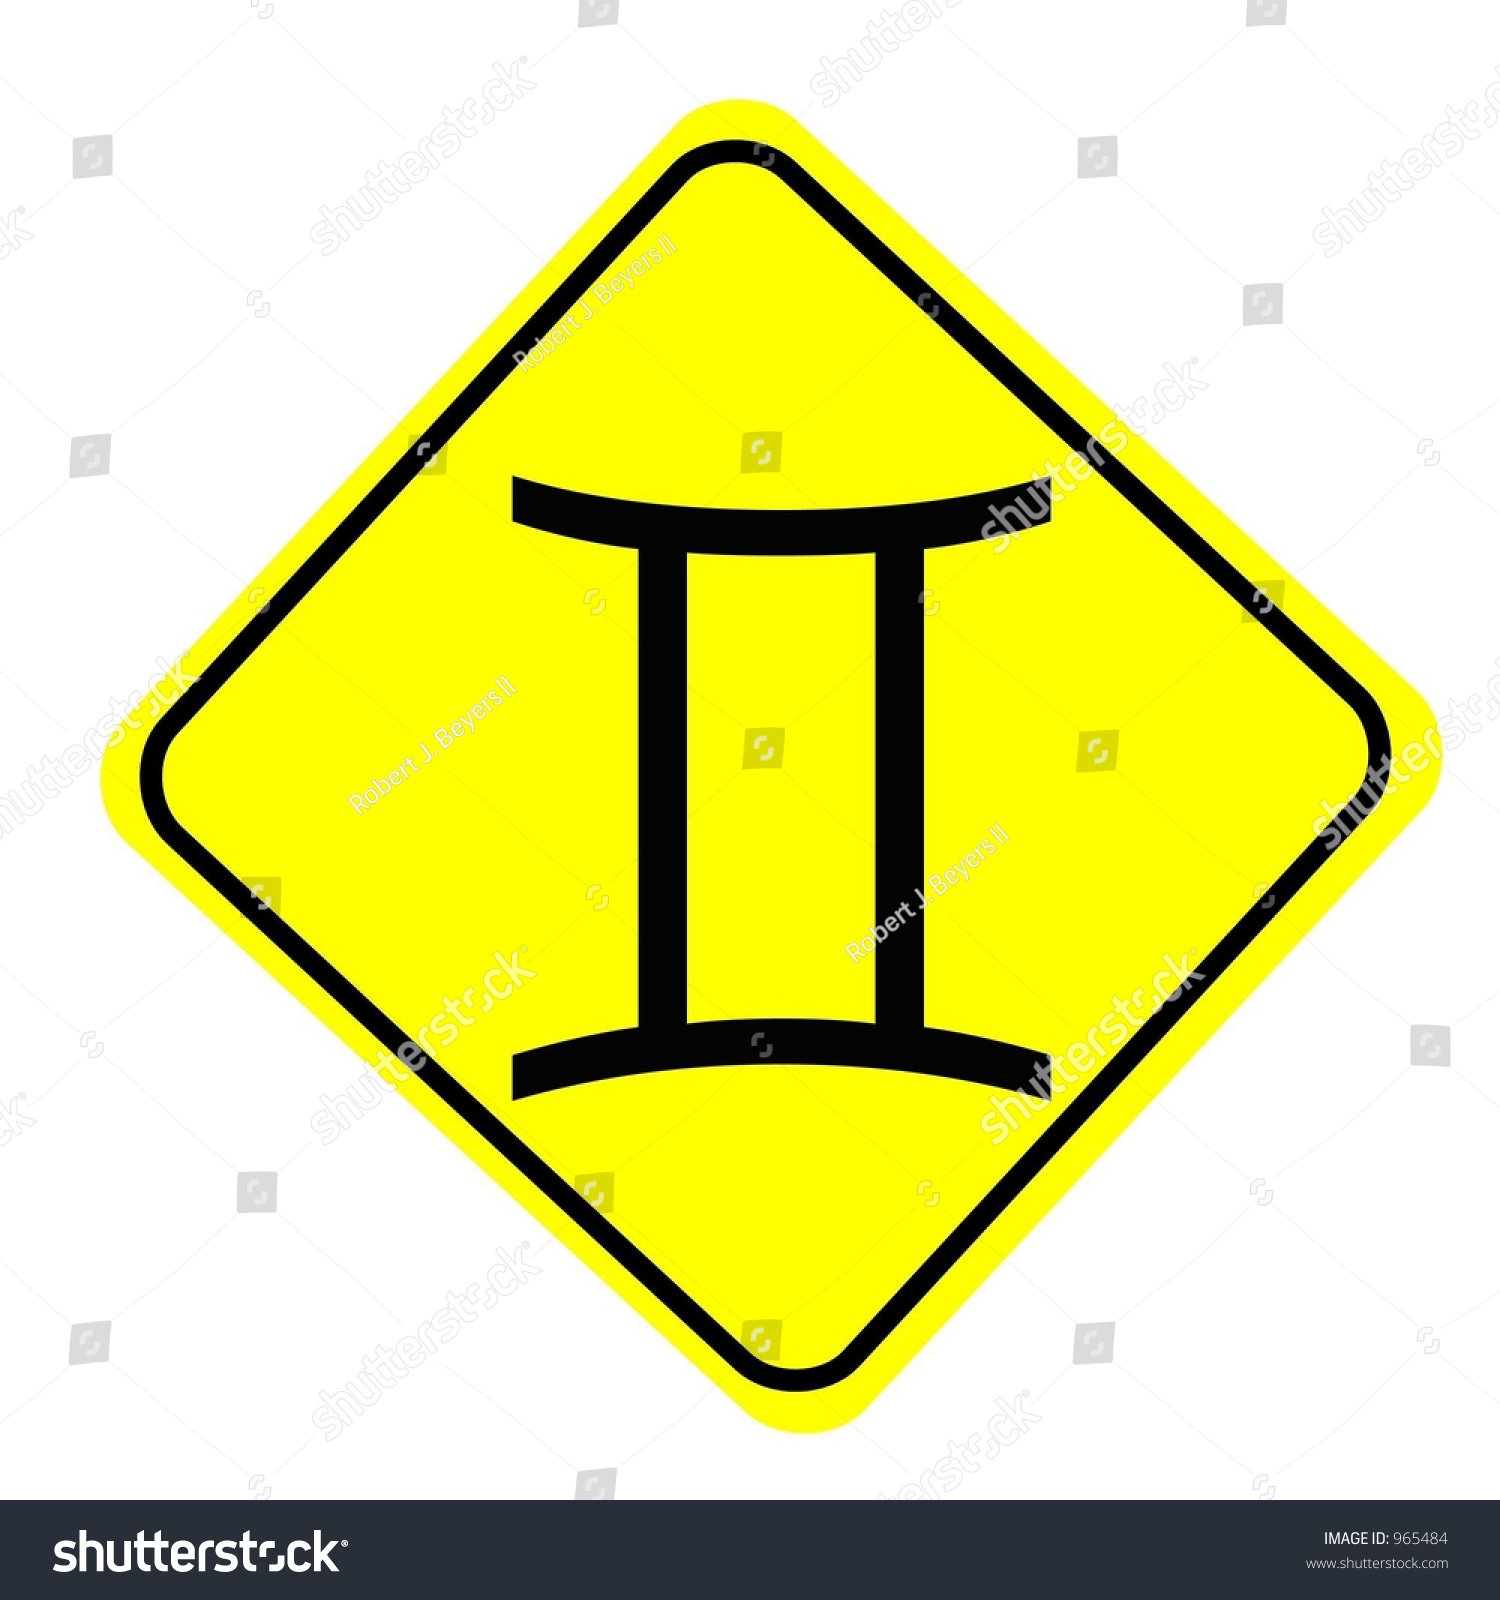 Gemini Symbol Sign Isolated On A White Background Stock Photo 965484